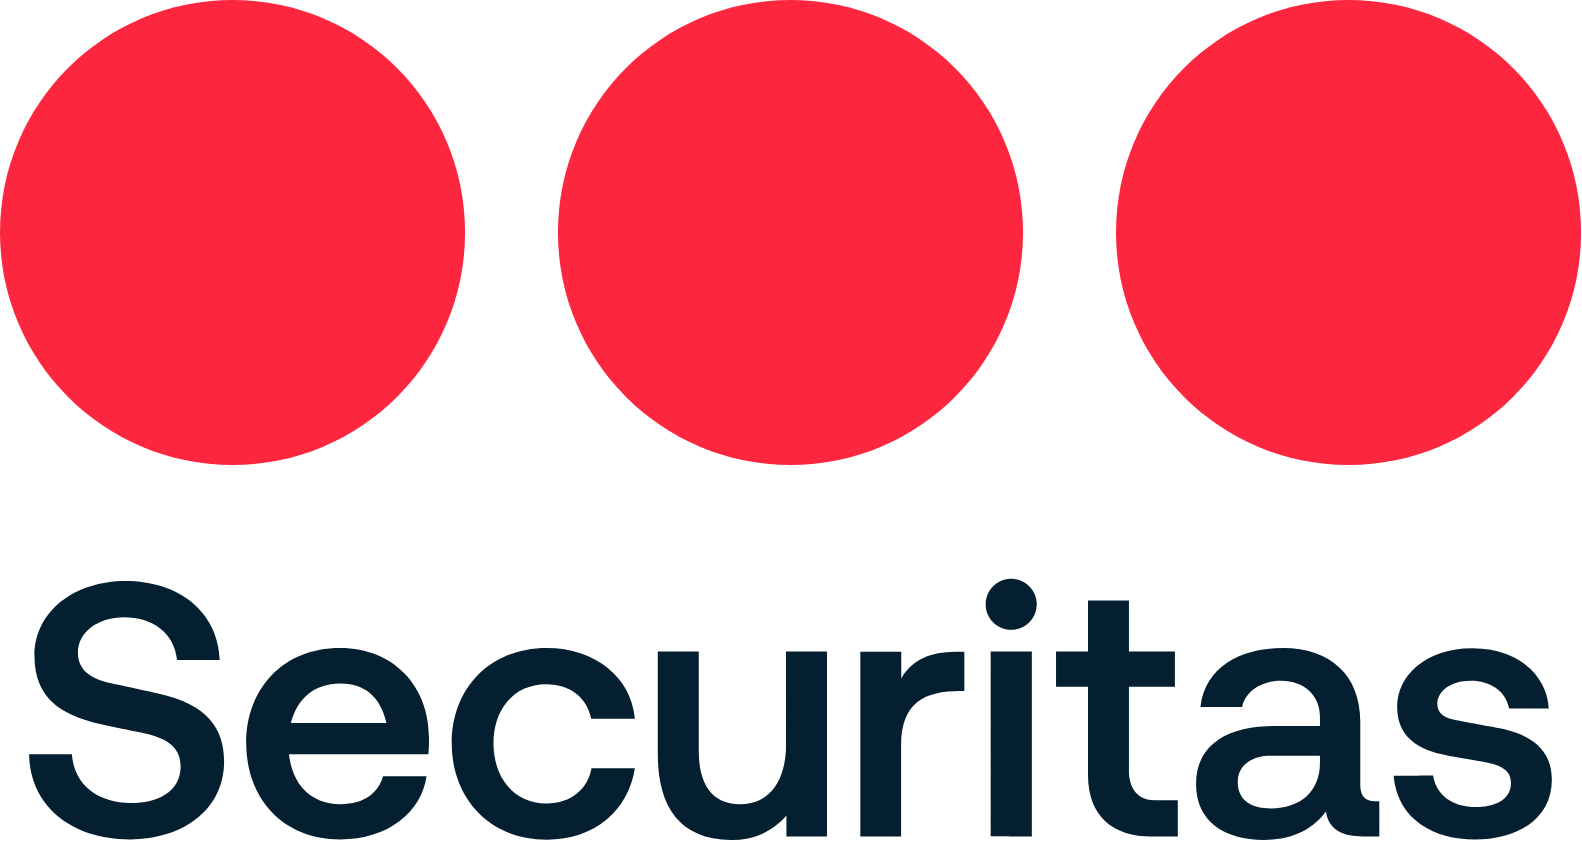 Securitas AB logo large (transparent PNG)